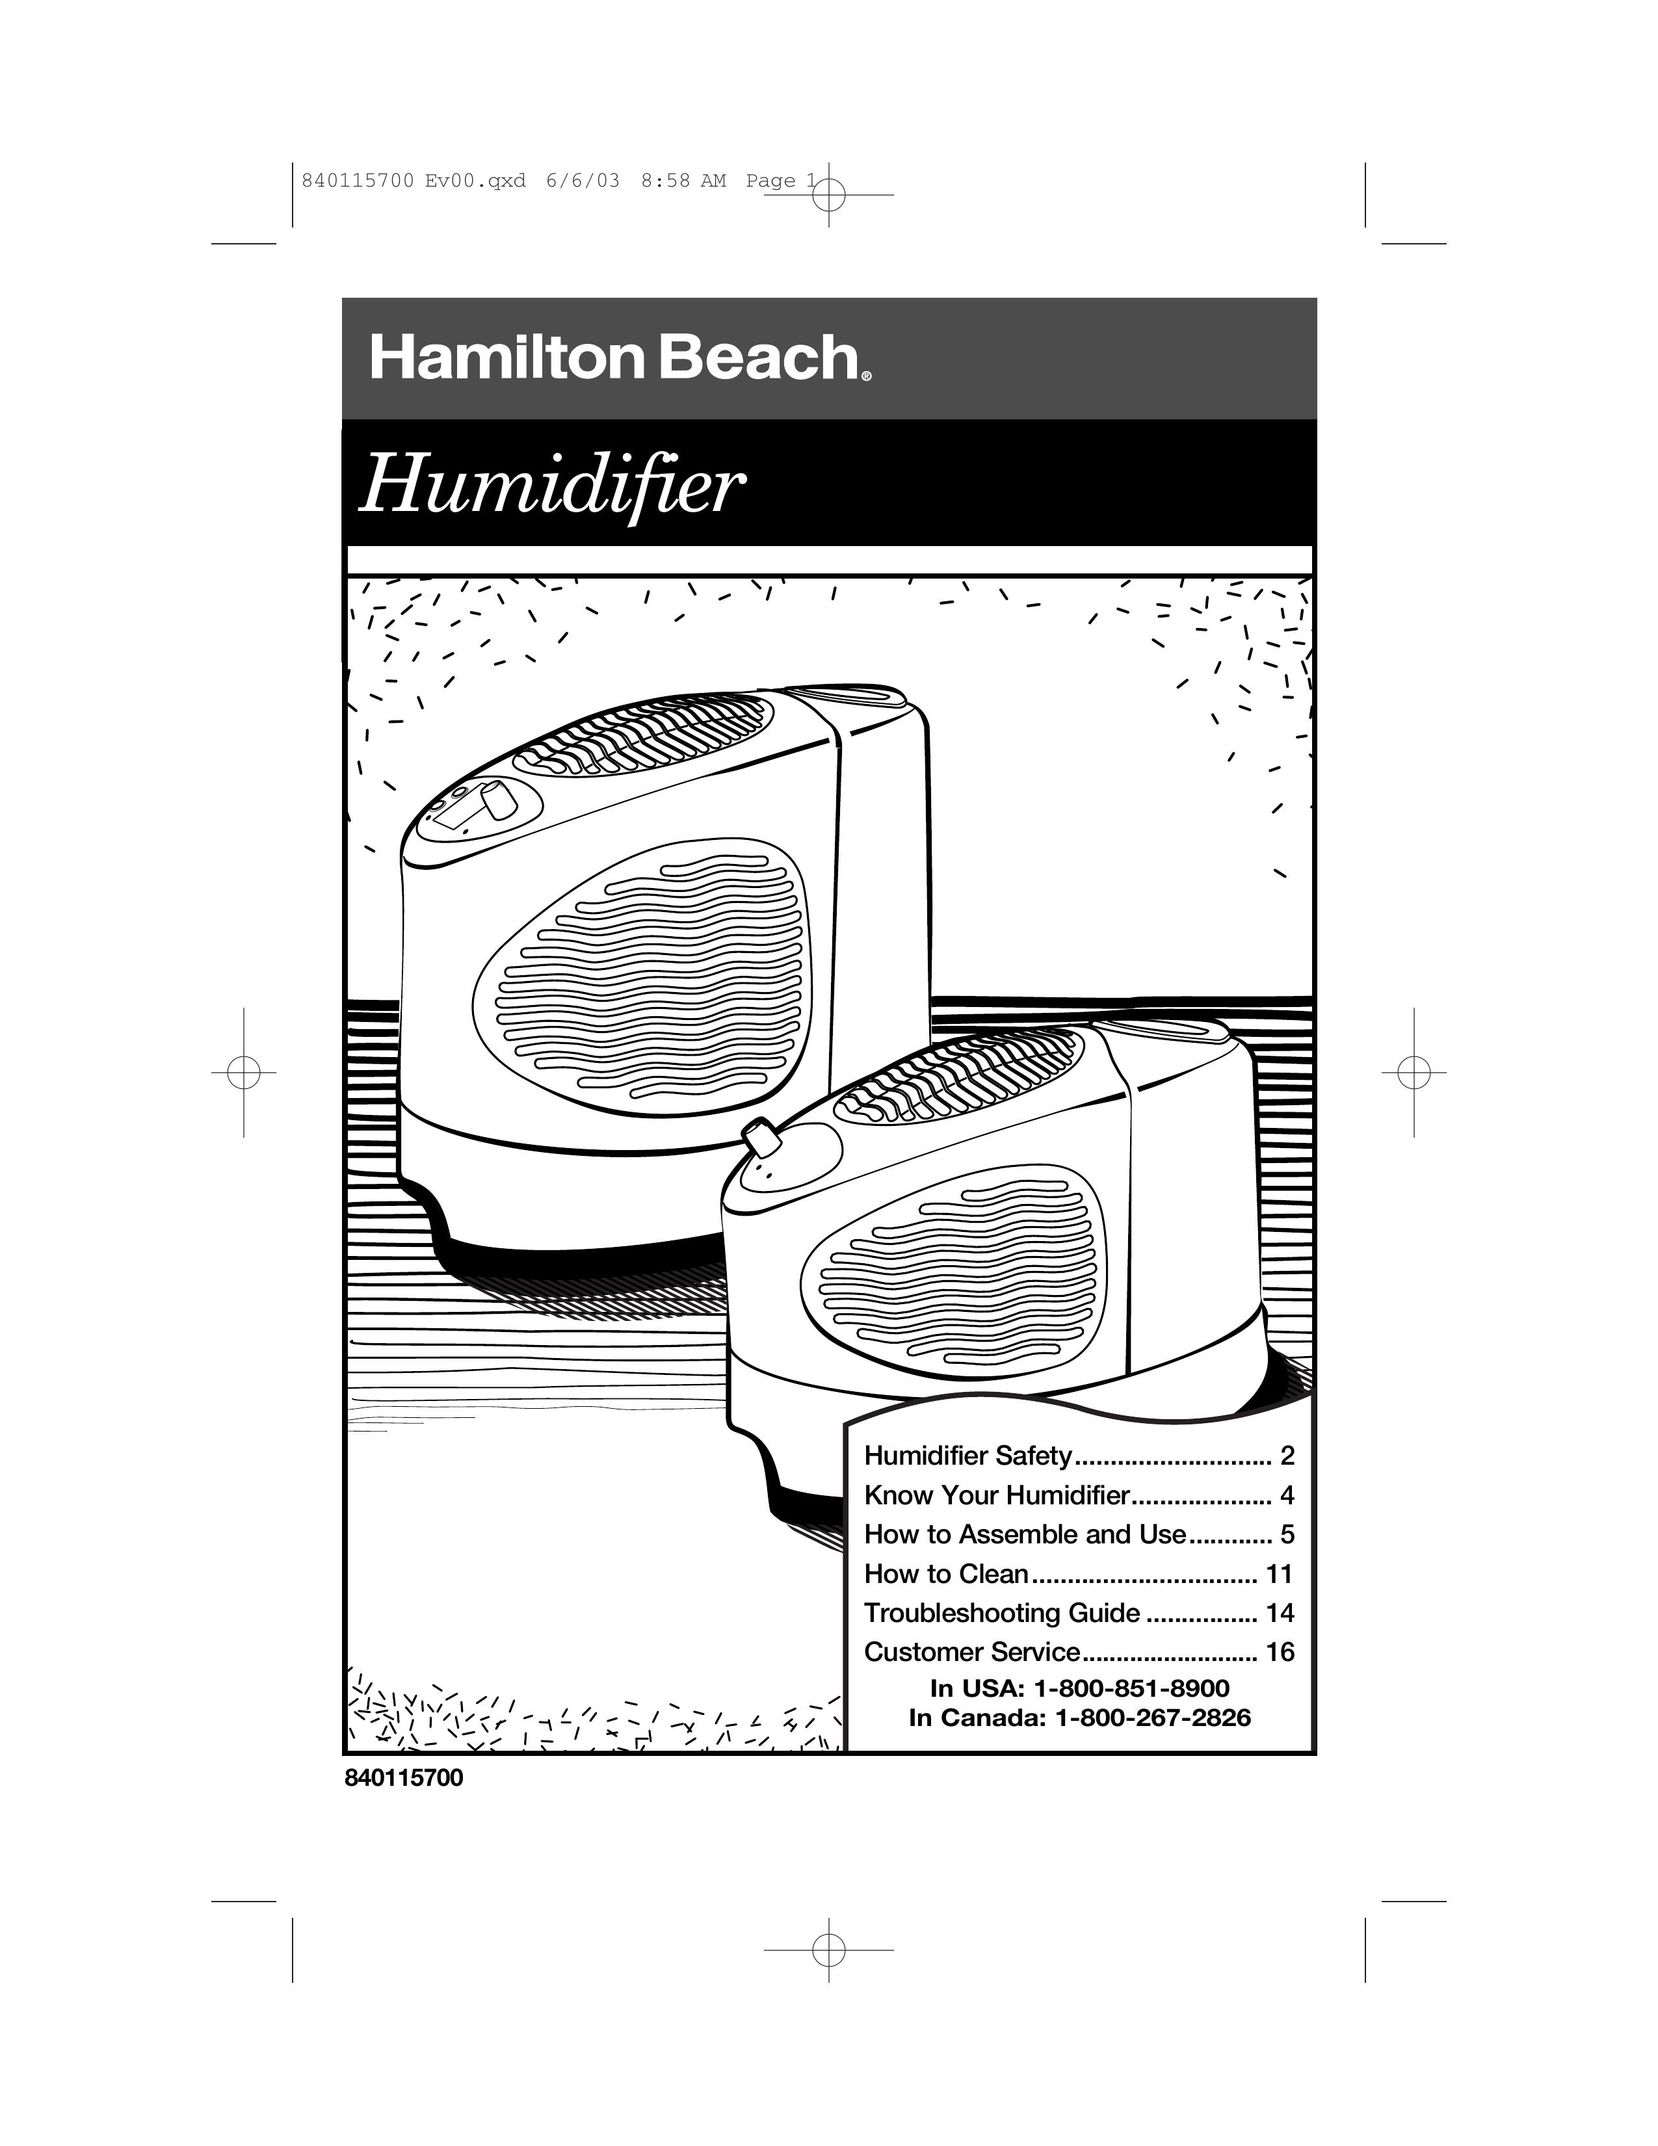 Hamilton Beach 05521C Humidifier User Manual